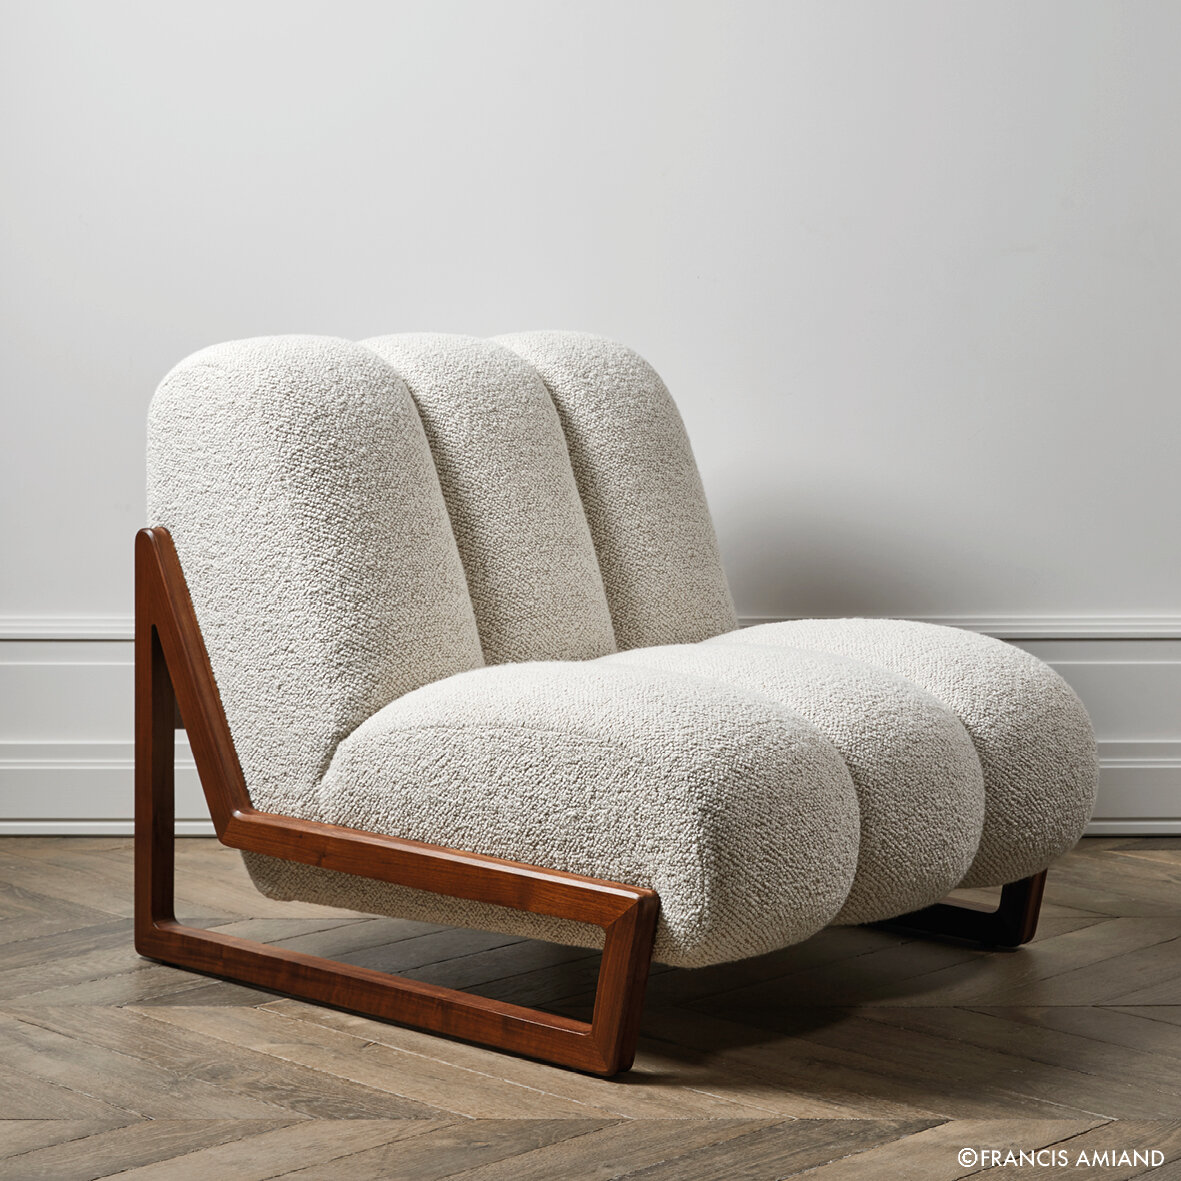 Humbert & Poyet - THEODORE sofa chair © Francis Amiand.jpg